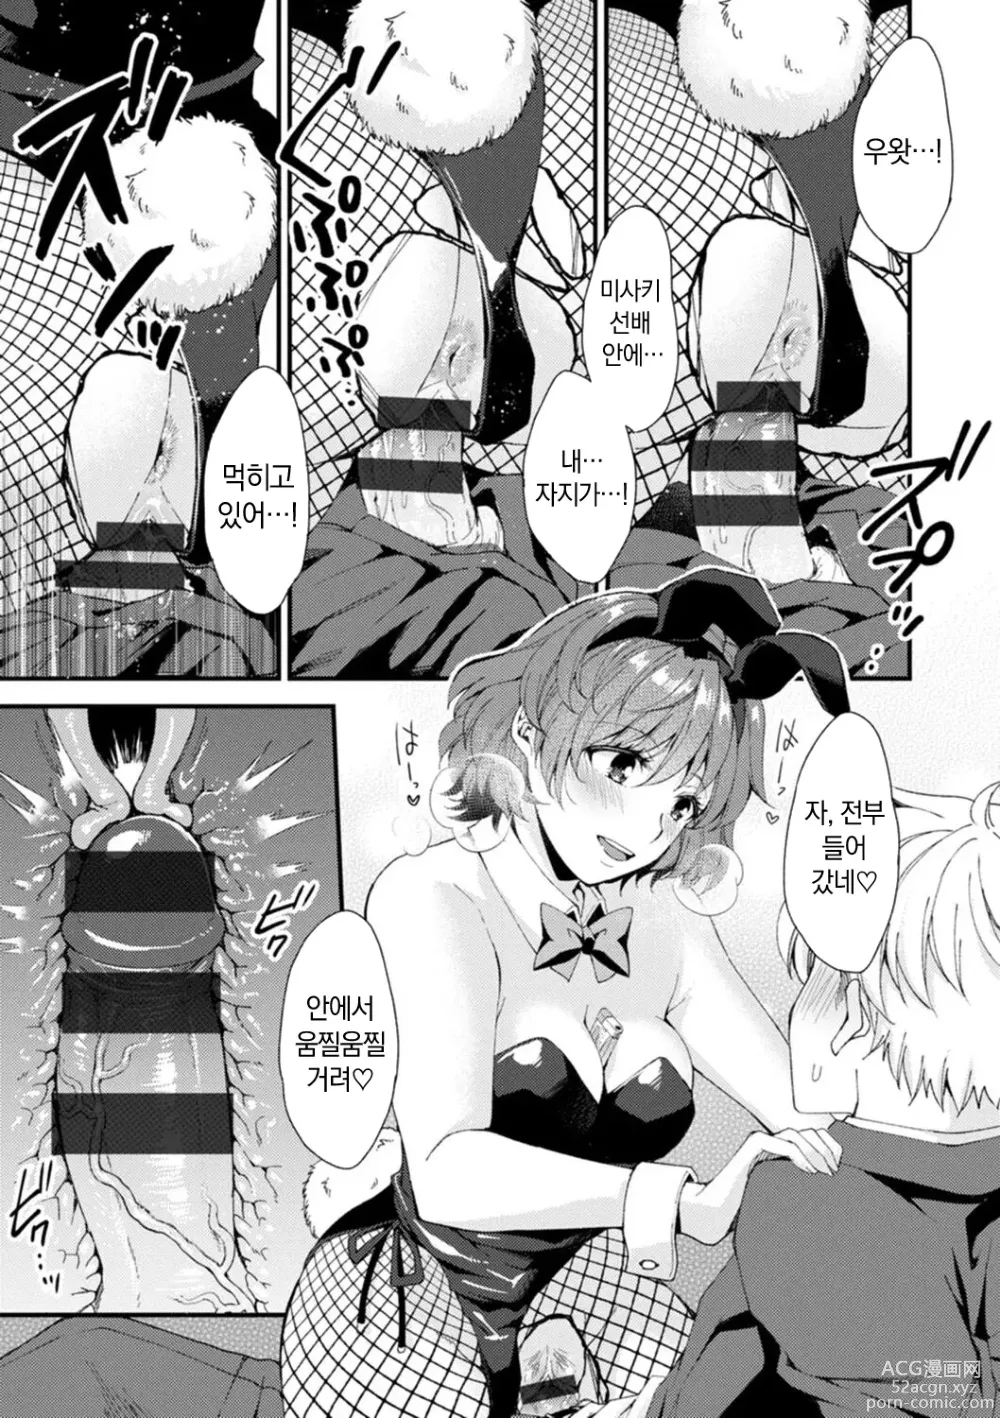 Page 15 of manga 취미가 바니걸이라니 정말이에요?